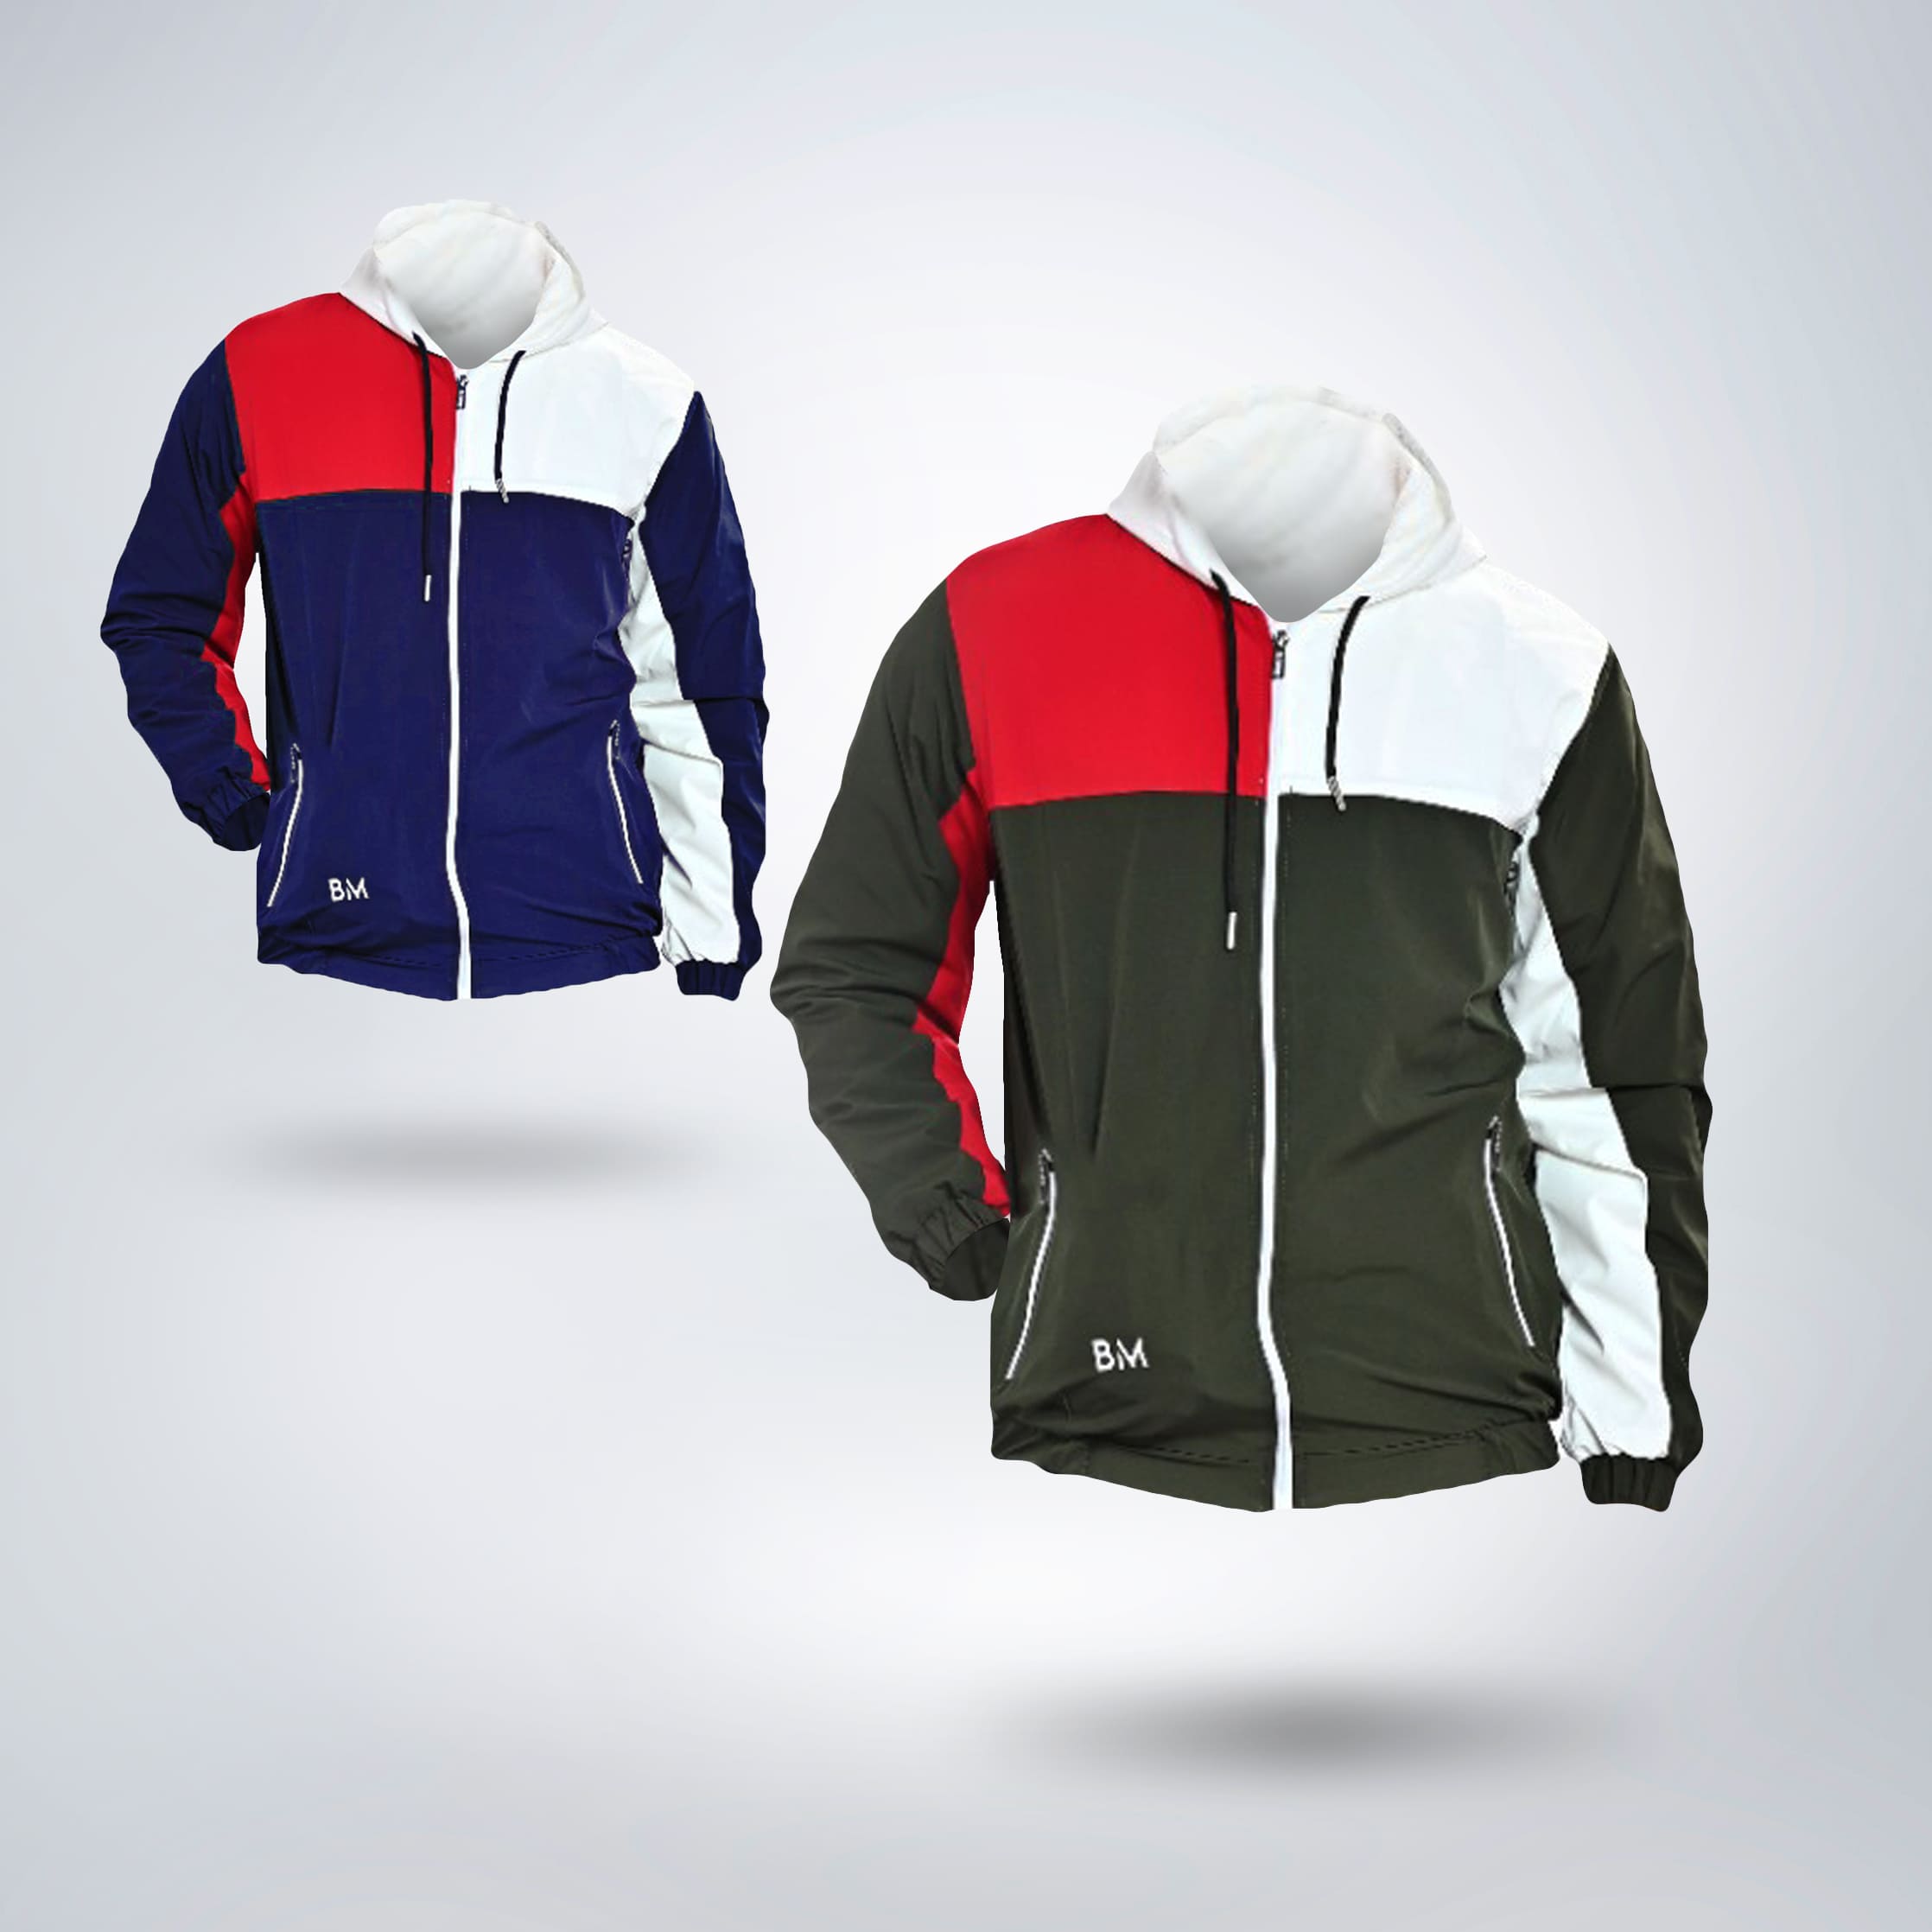 Activewear Jacket for Men | Sports | Gym | Yoga | MZR5HD Men's Jacket